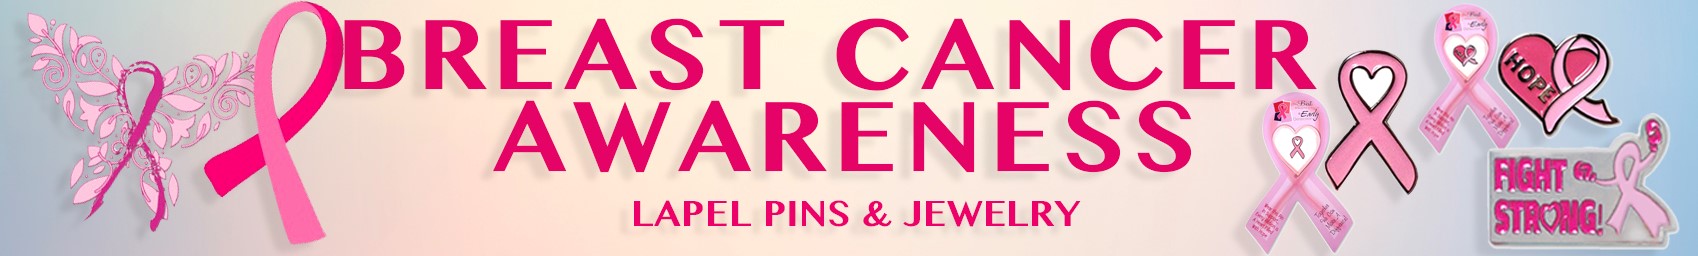 Lapel Pins & Jewelry